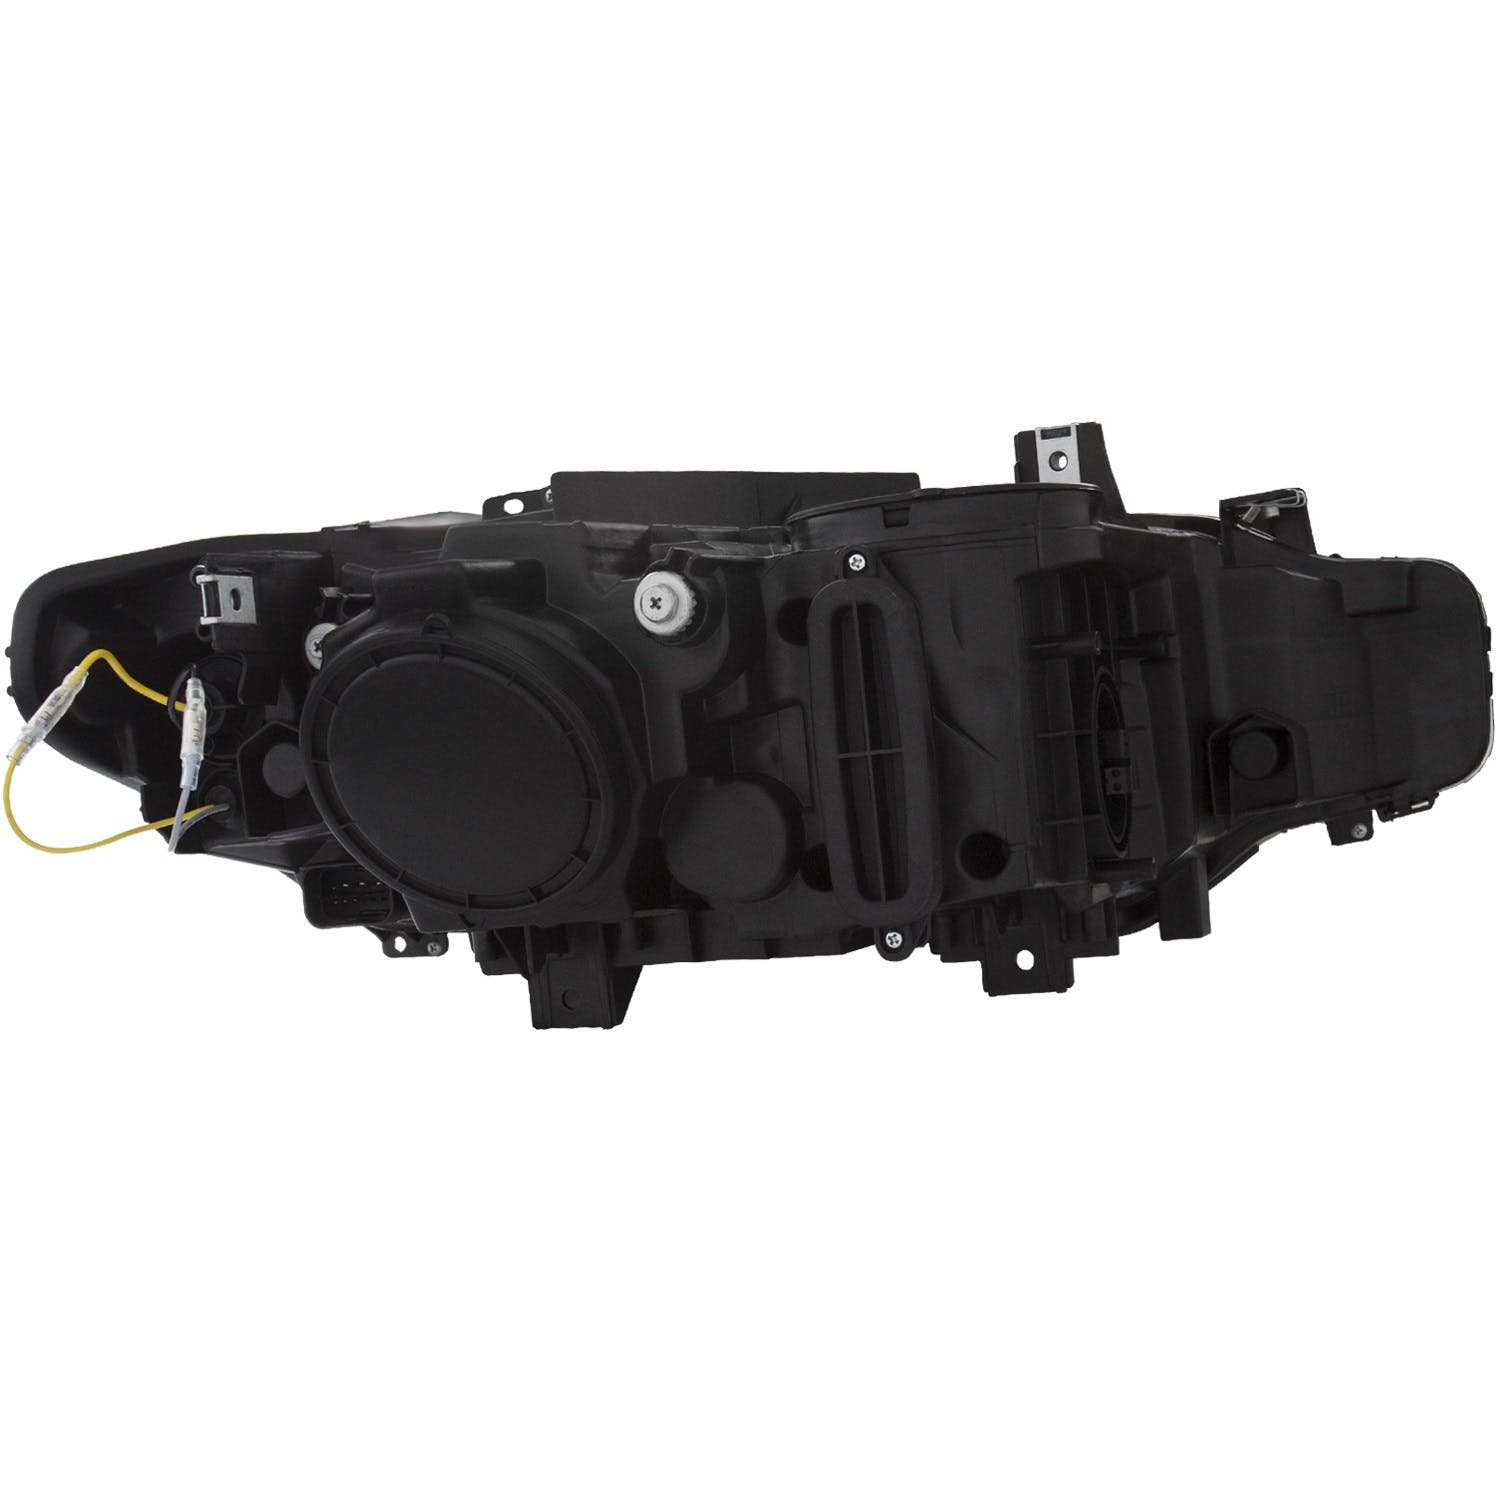 AnzoUSA 121504 Projector Headlights with U-Bar Black